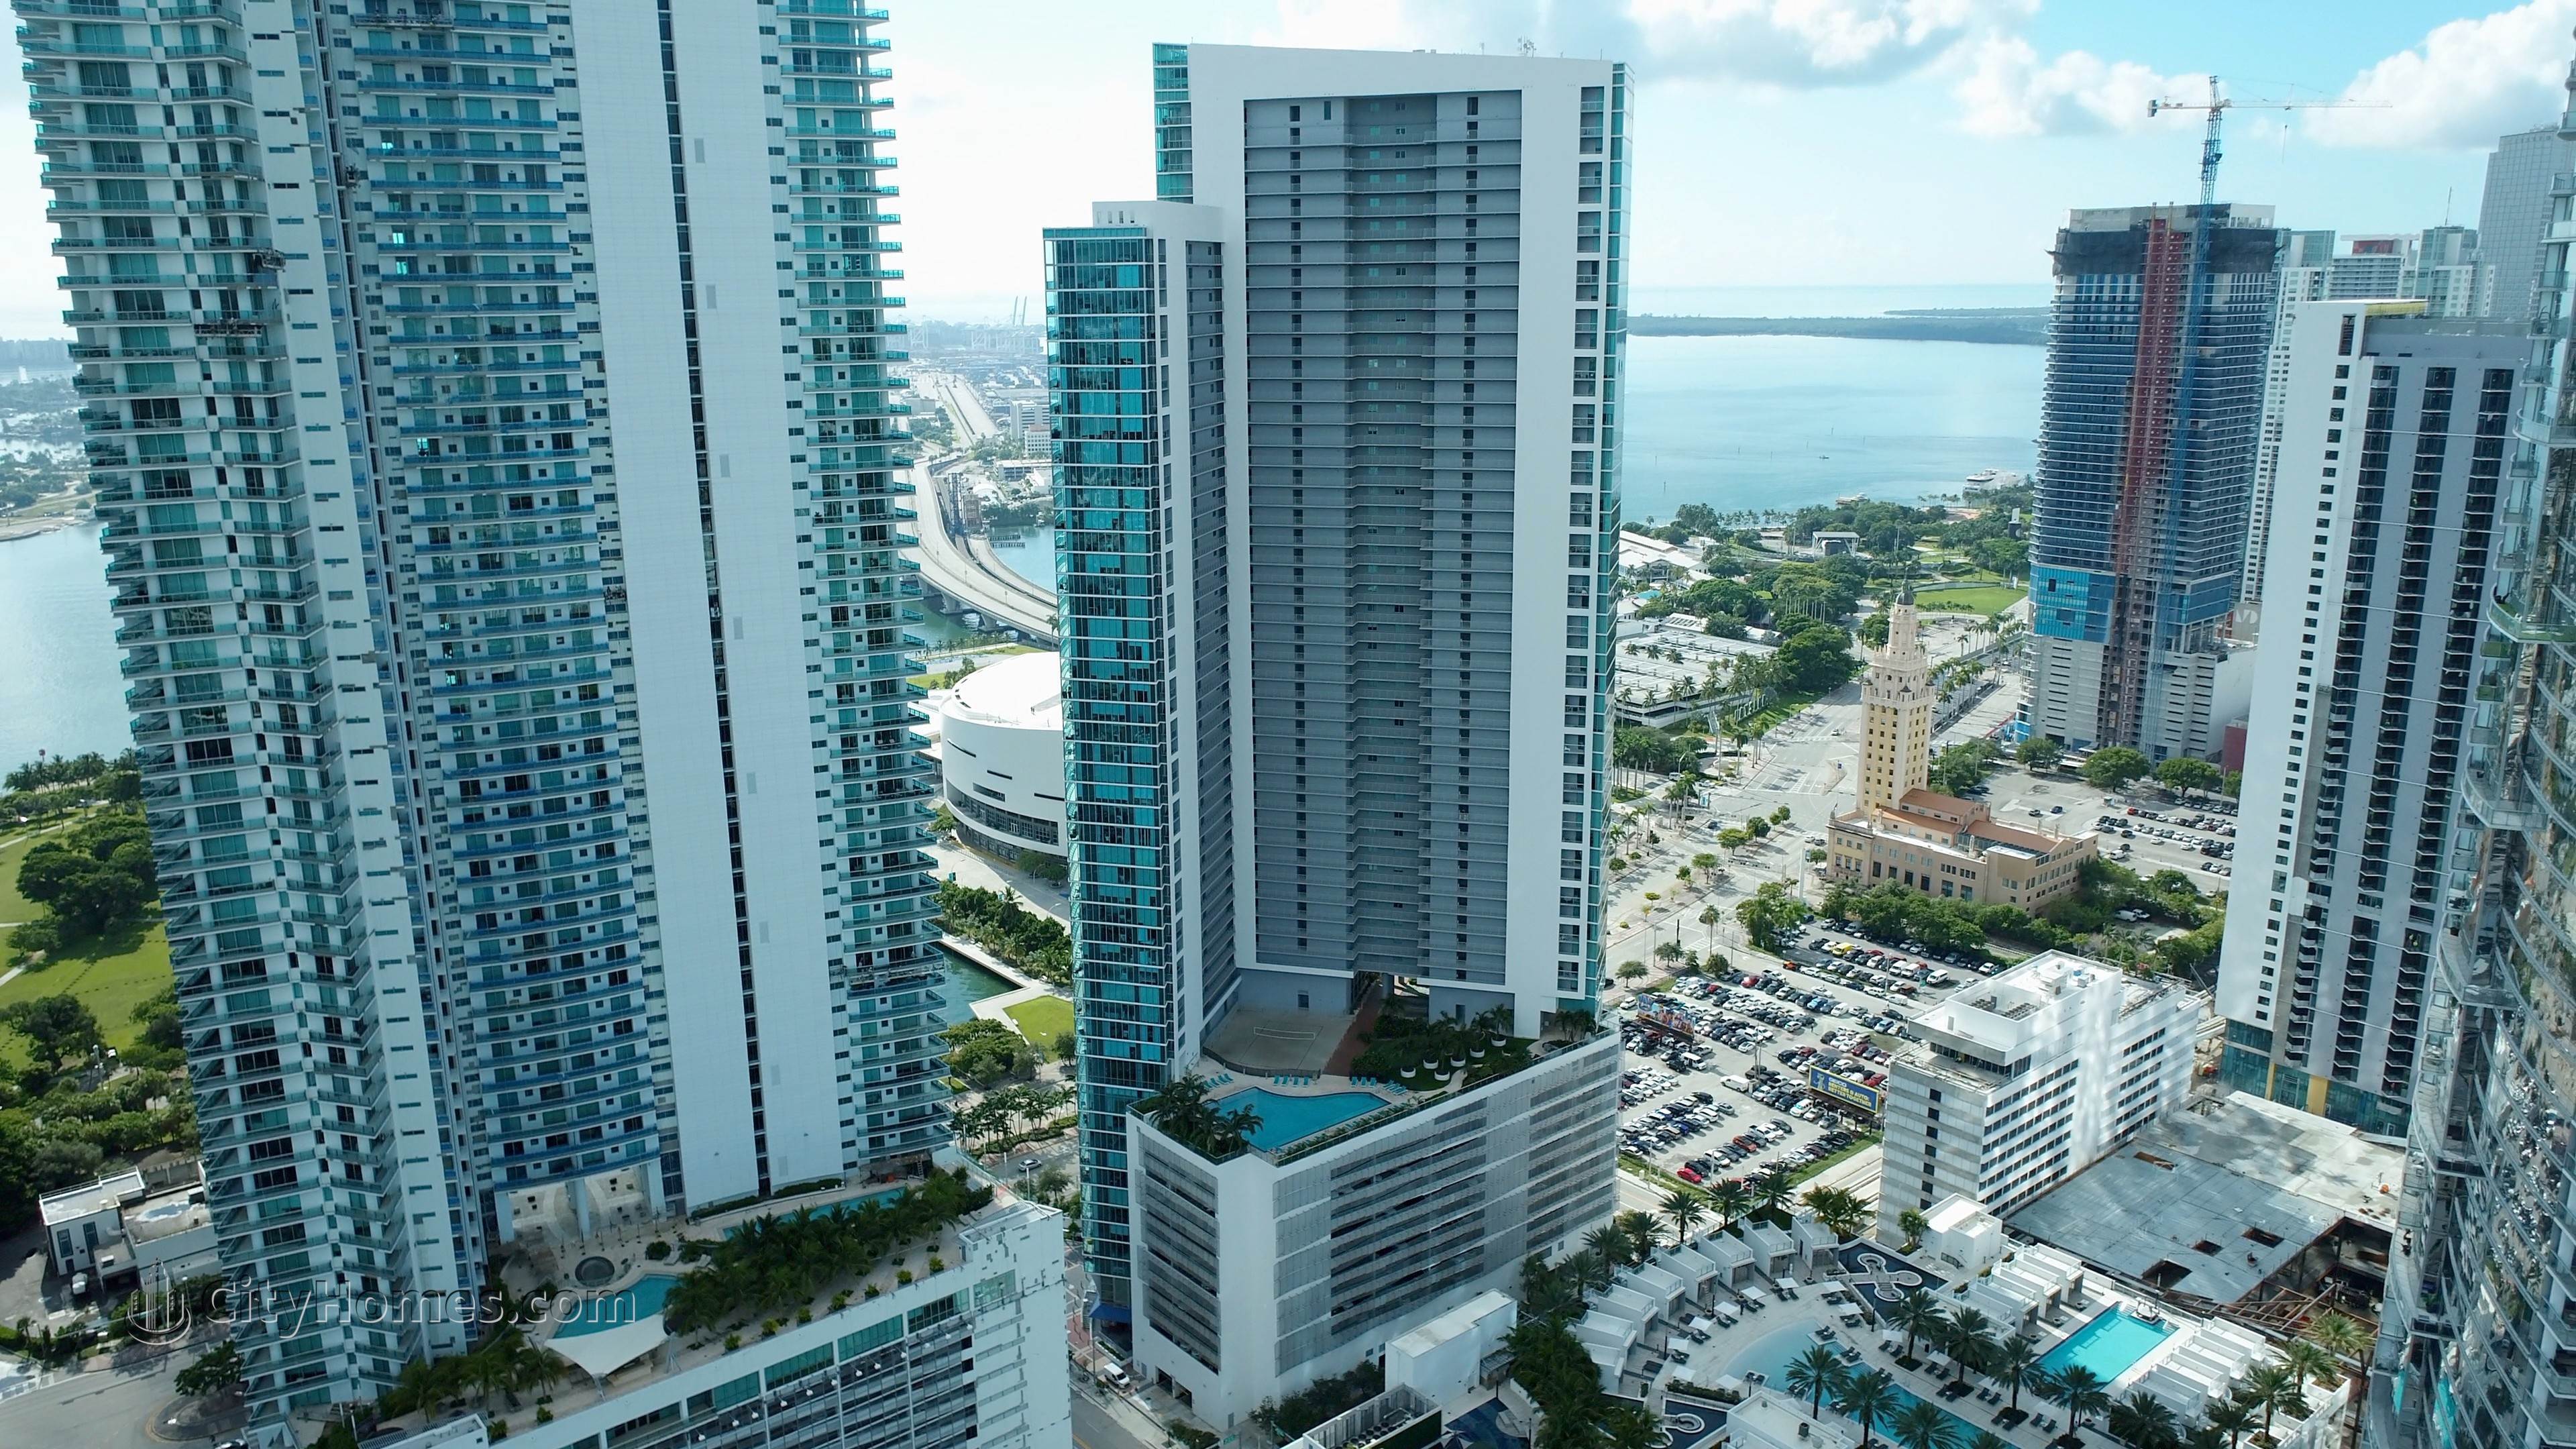 3. 900 Biscayne Bay building at 900 Biscayne Boulevard, Miami, FL 33132